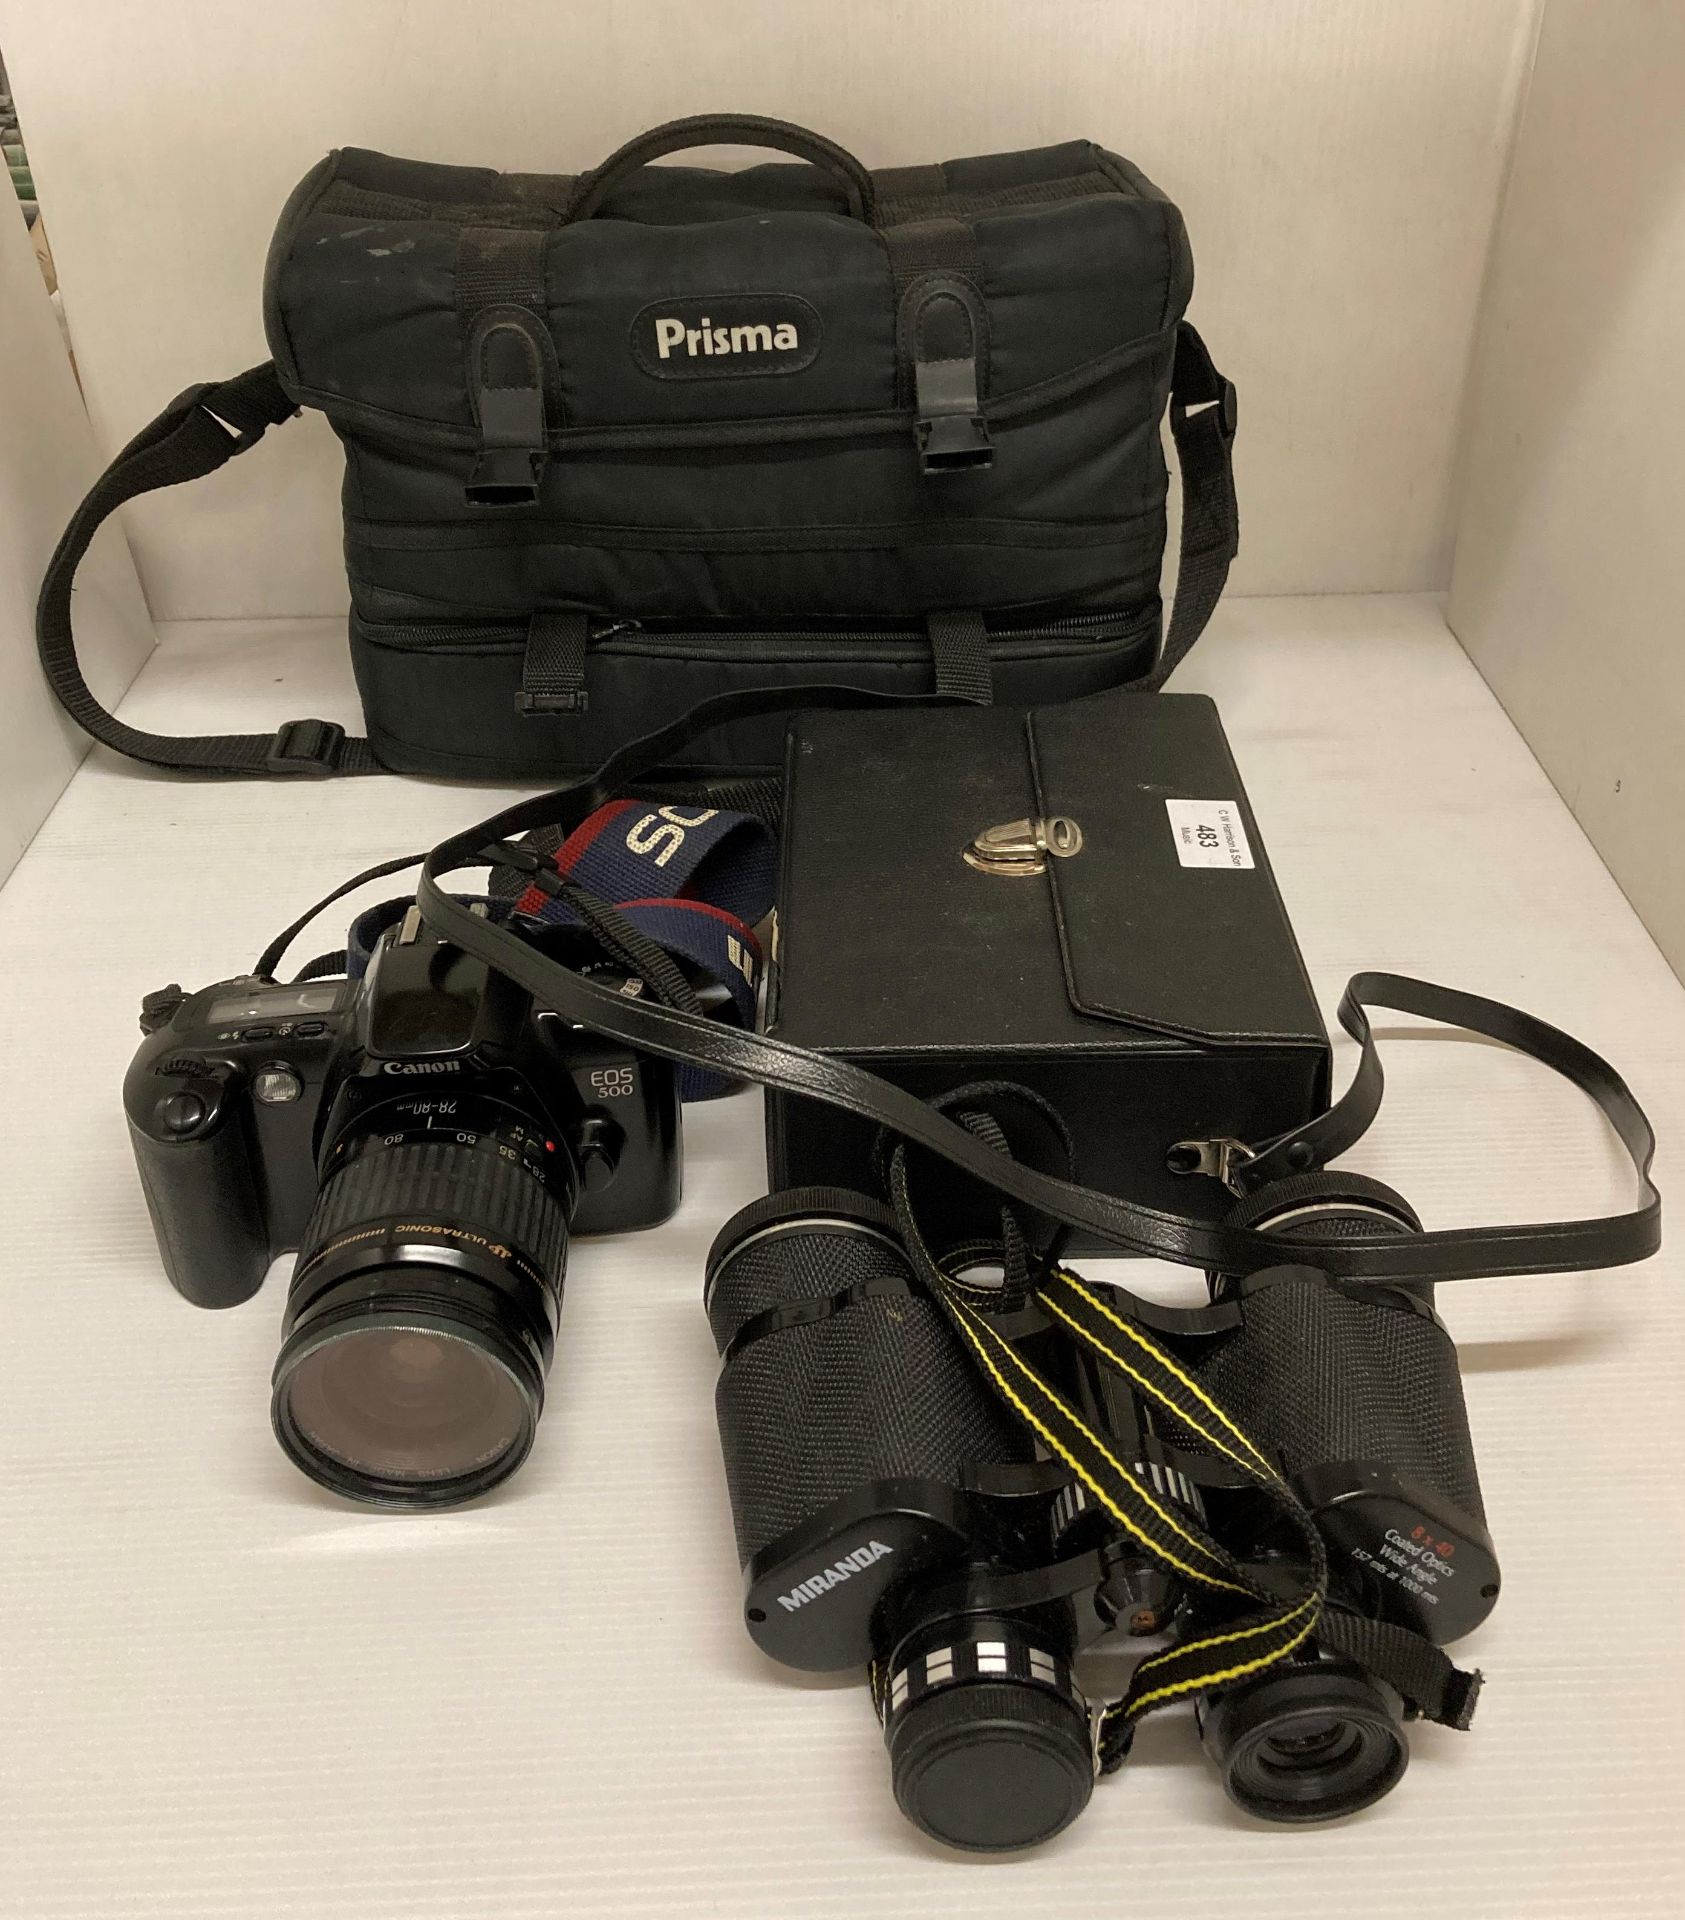 Canon E05 500 camera with a Canon ultrasonic 28-80mm lens in a Prisma bag and a pair of Miranda